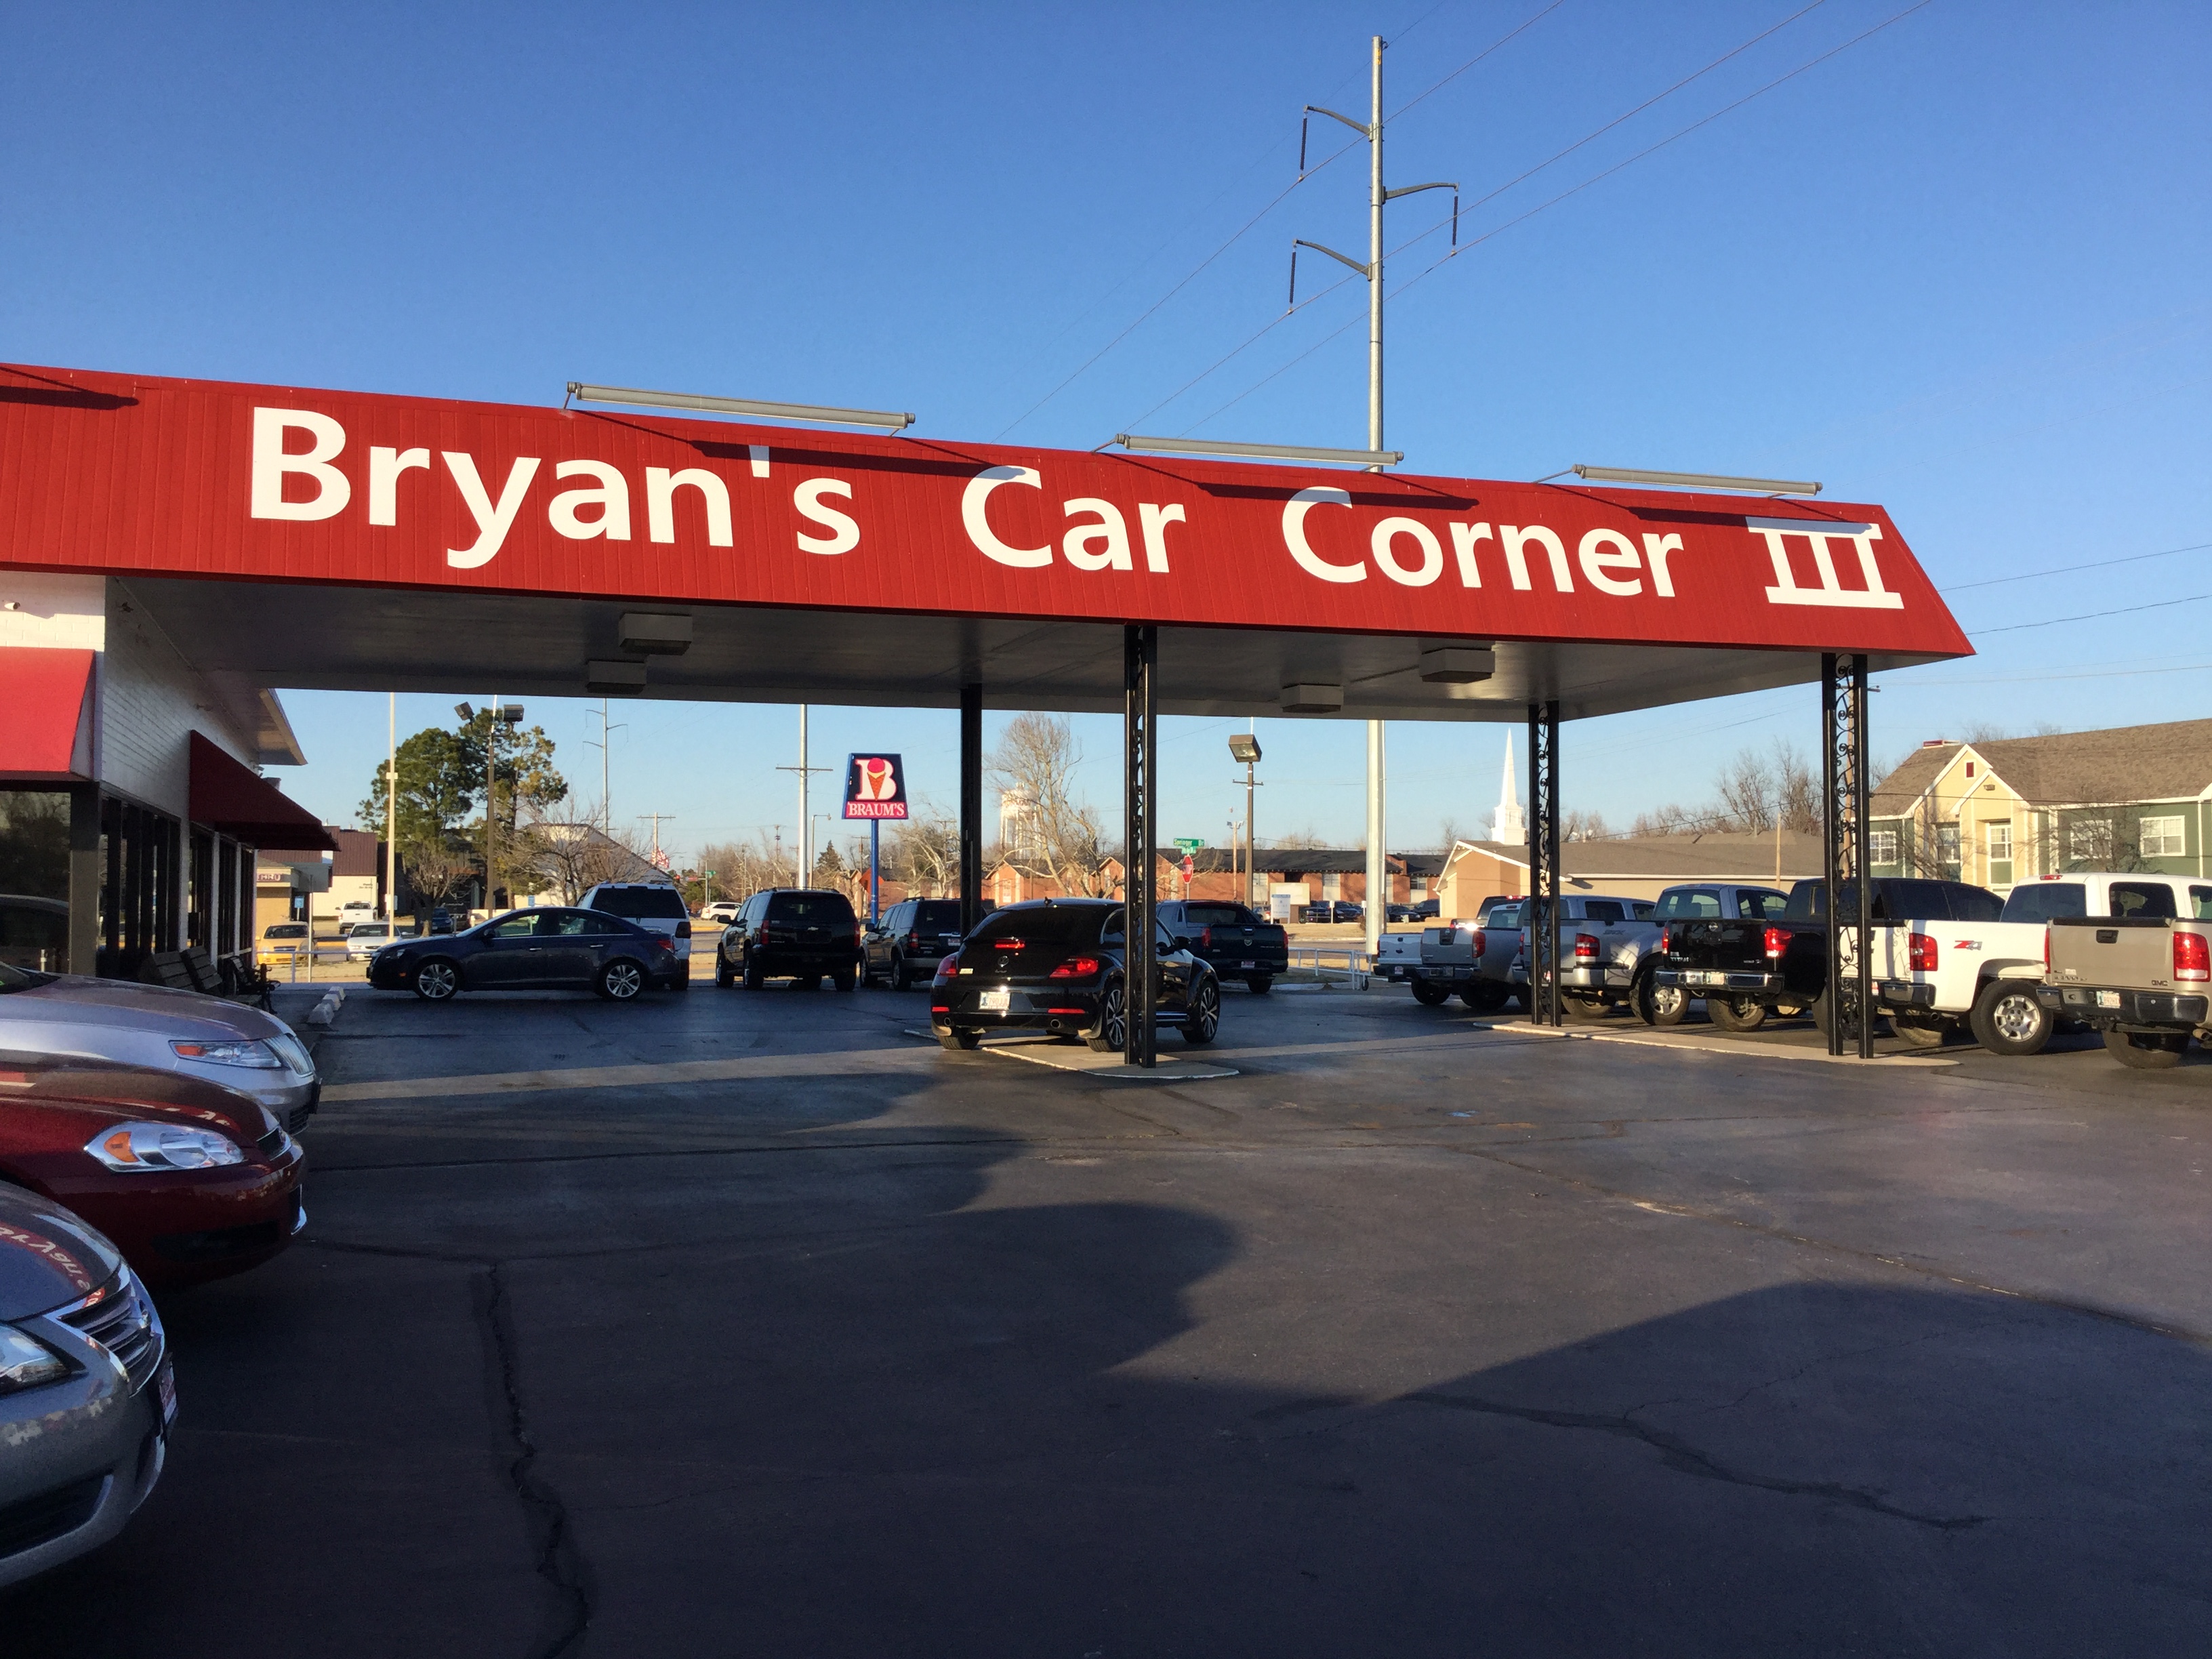 Bryans Car Corner Iii - Midwest City Ok Carscom